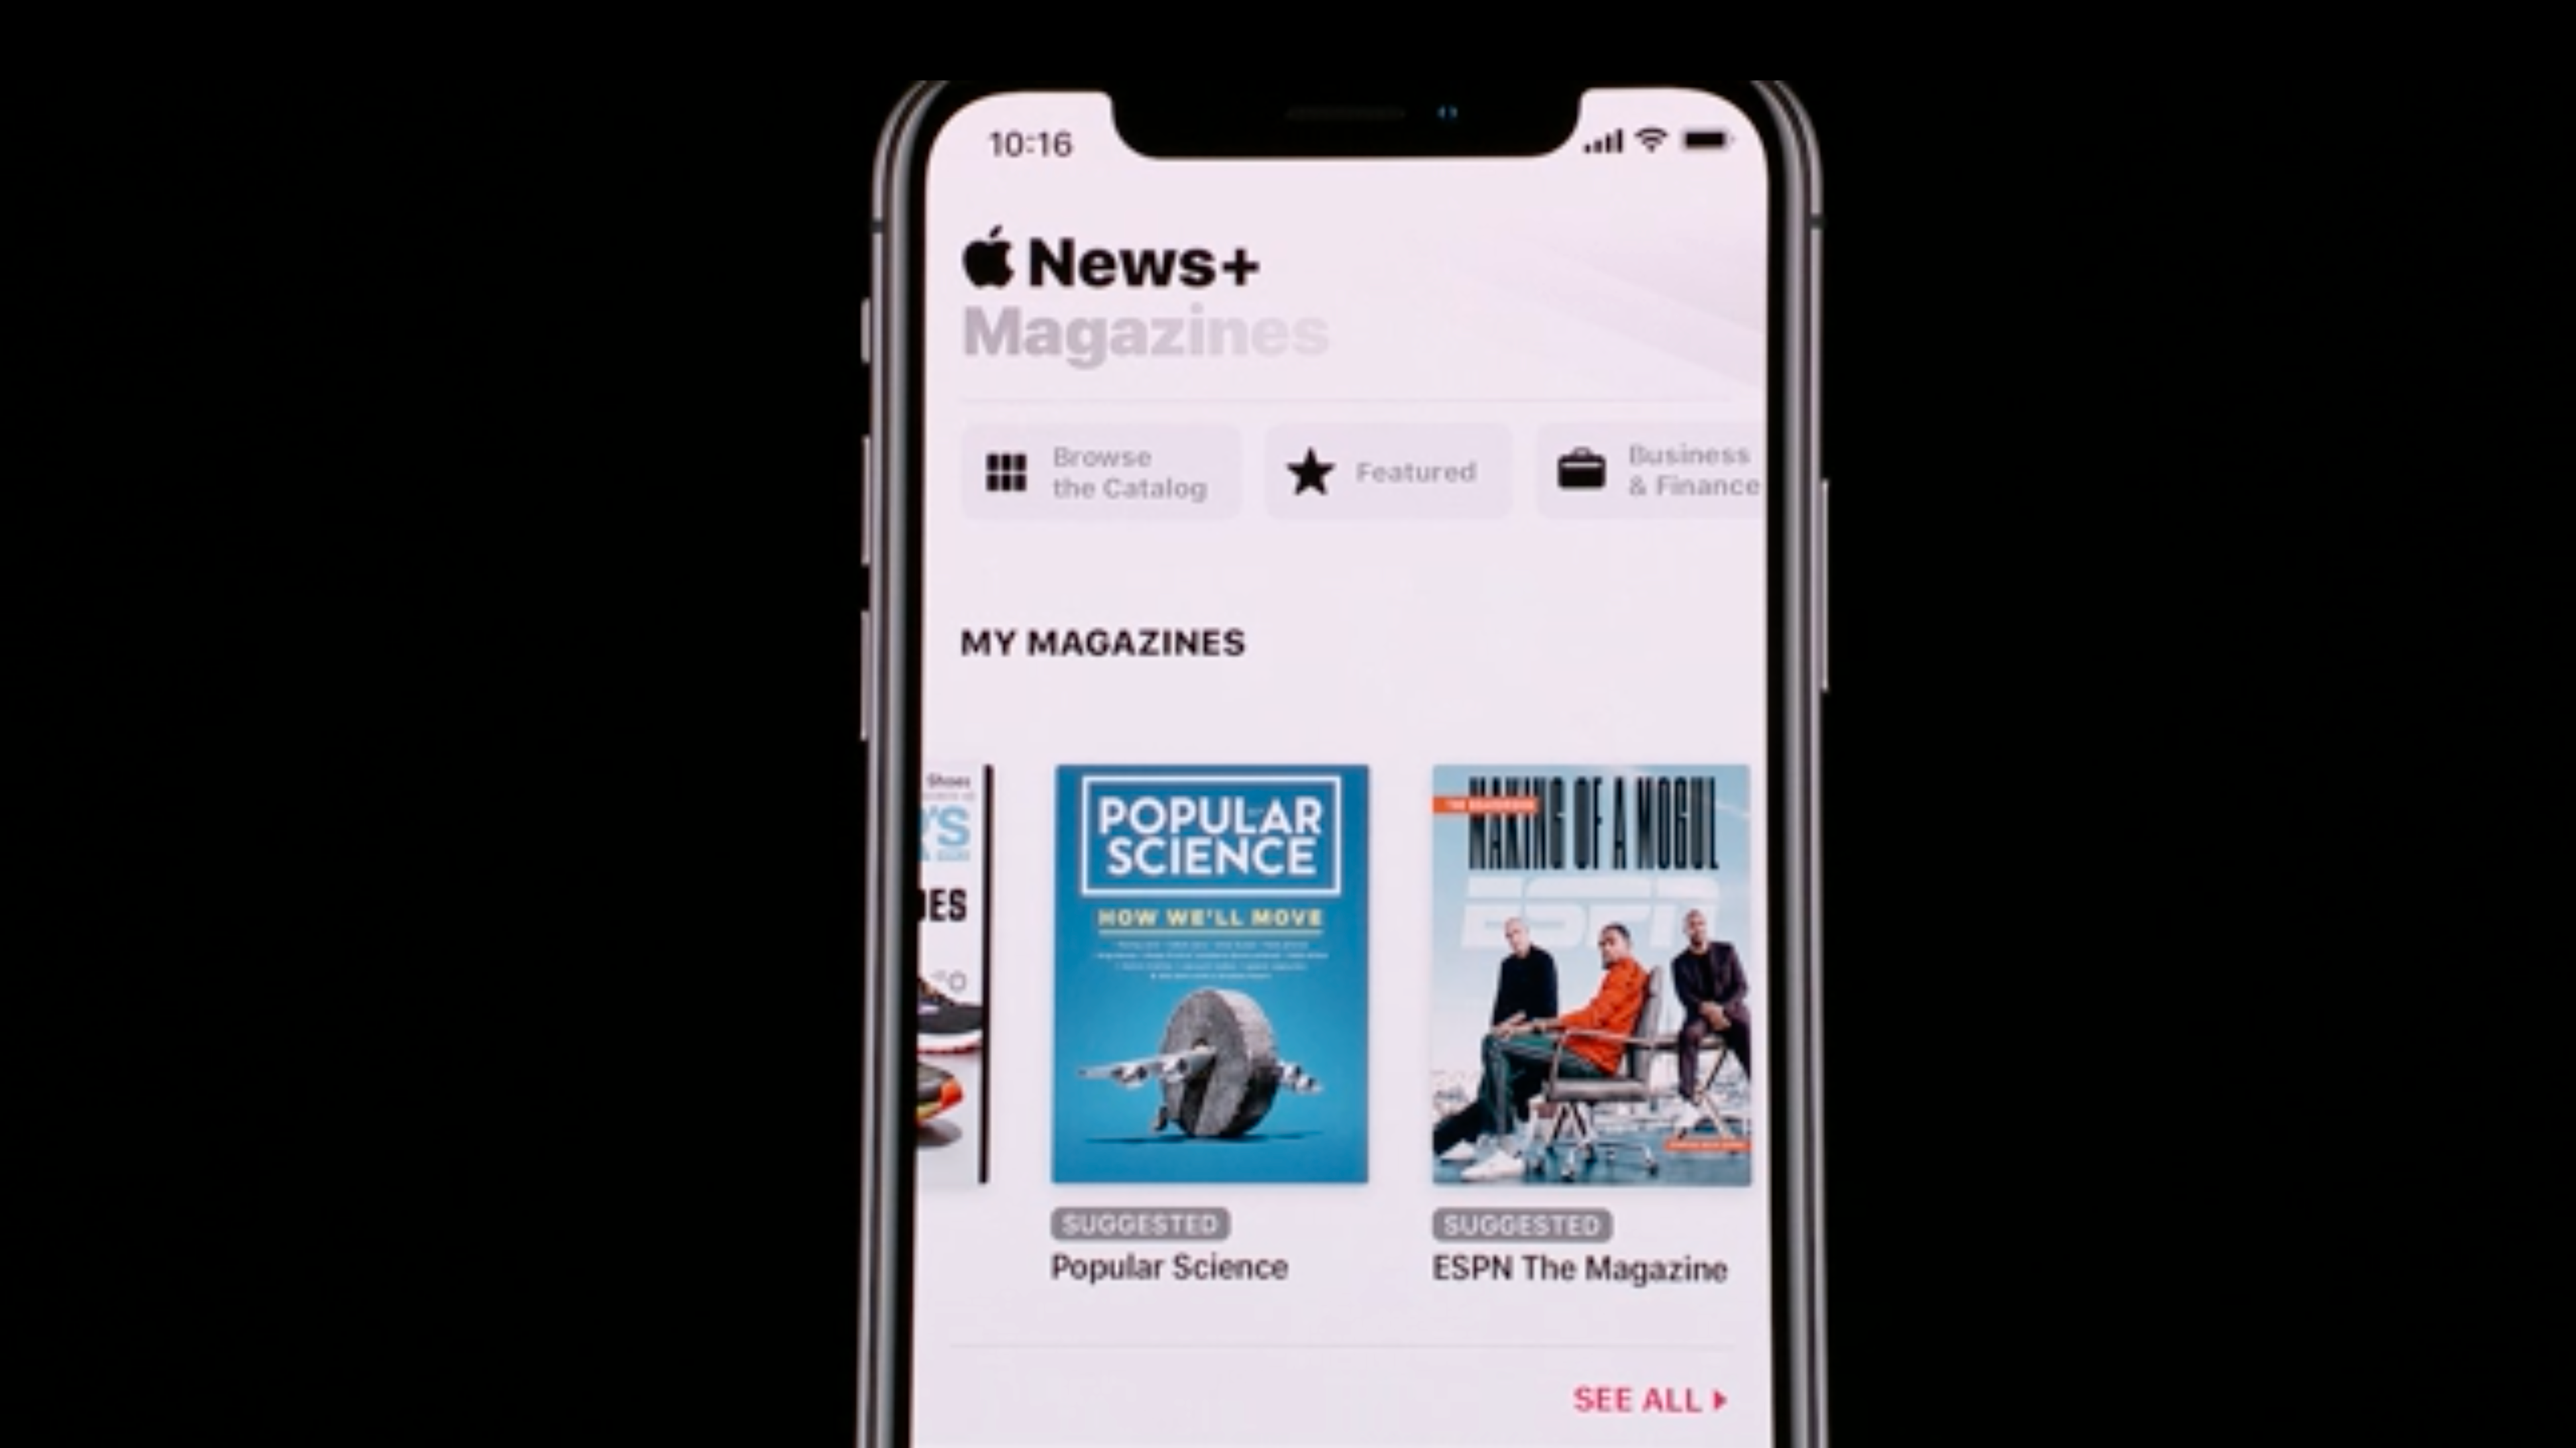 Apples nye News+-tjeneste gir tilgang til 300 magasiner og aviser for 10 dollar i måneden - foreløpig kun i USA og Canada.